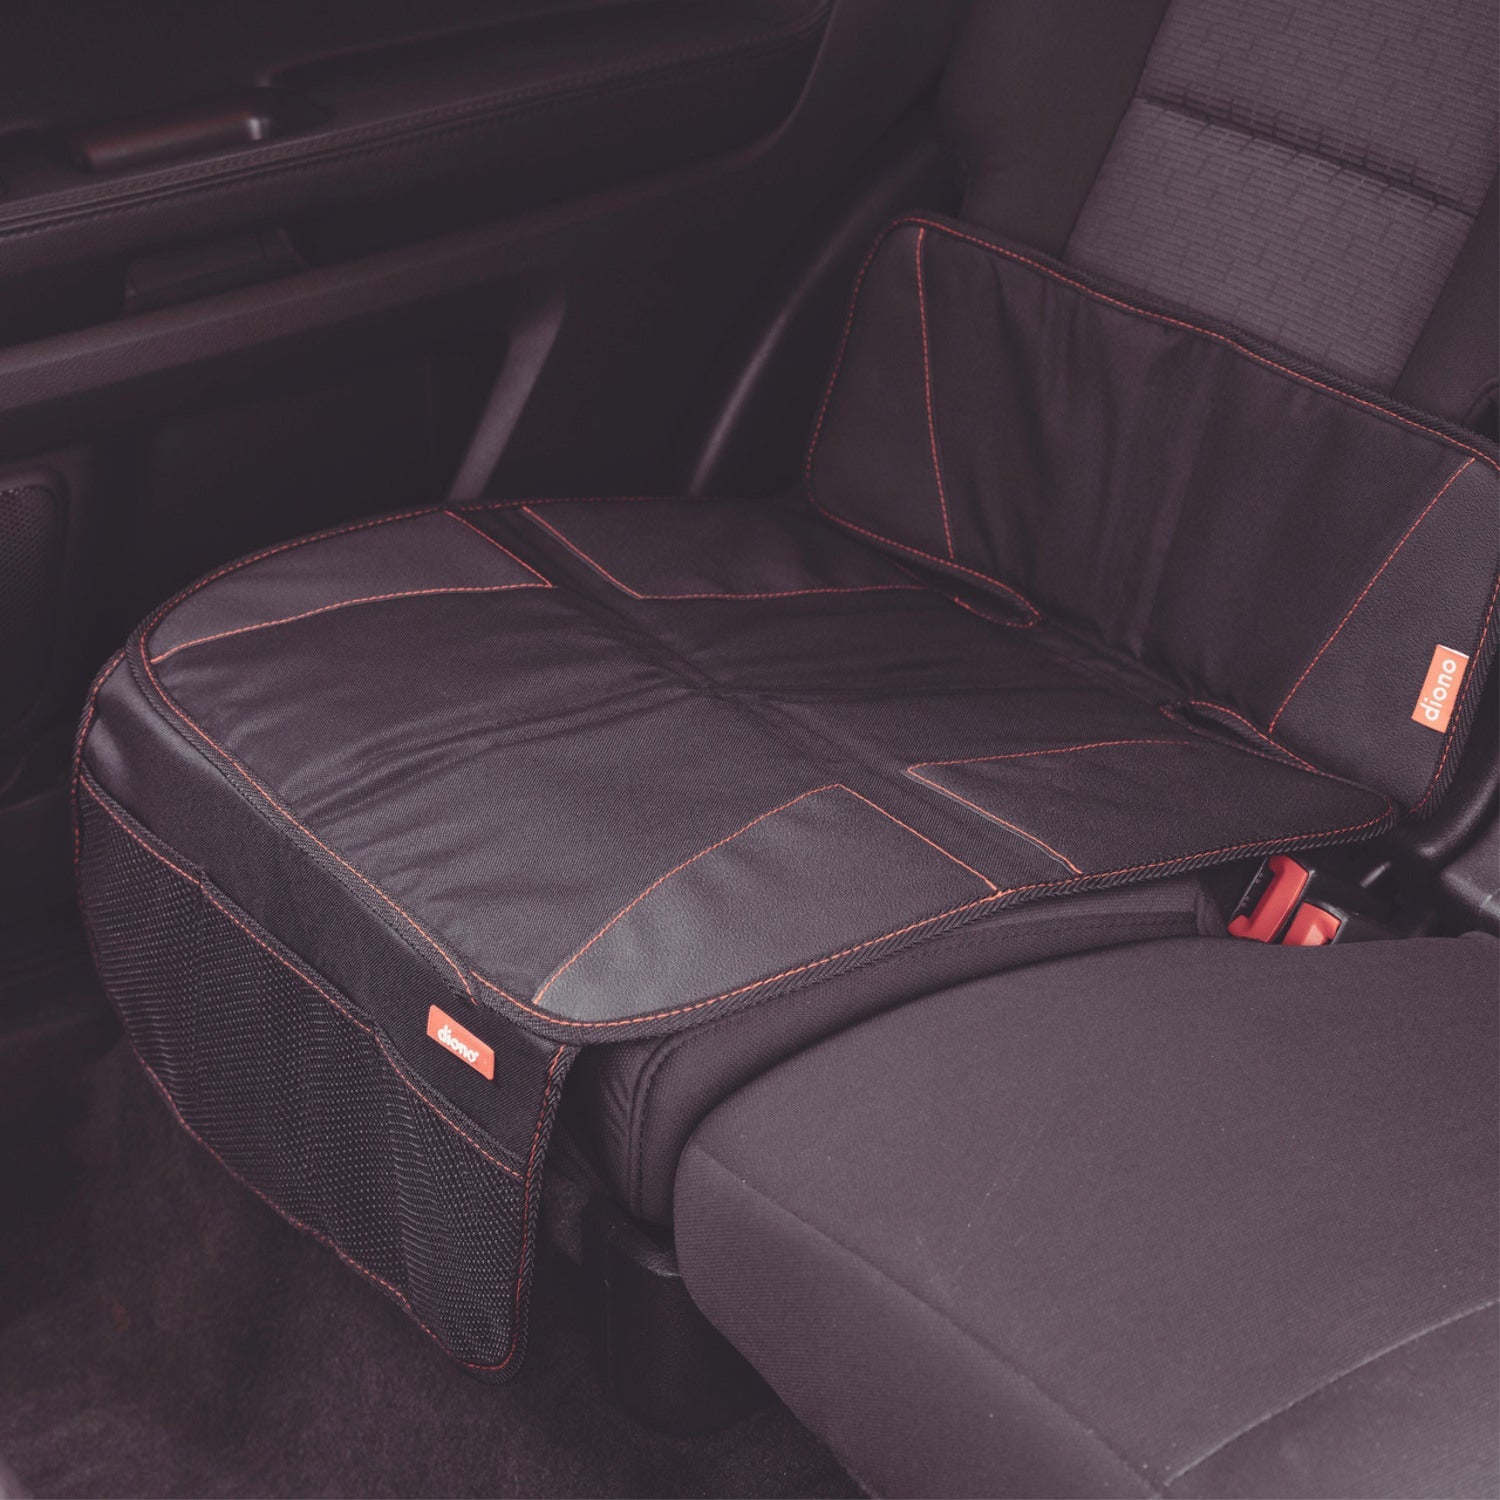 Diono Super Mat Car Seat Protector, Gray - ANB Baby -car seat protector